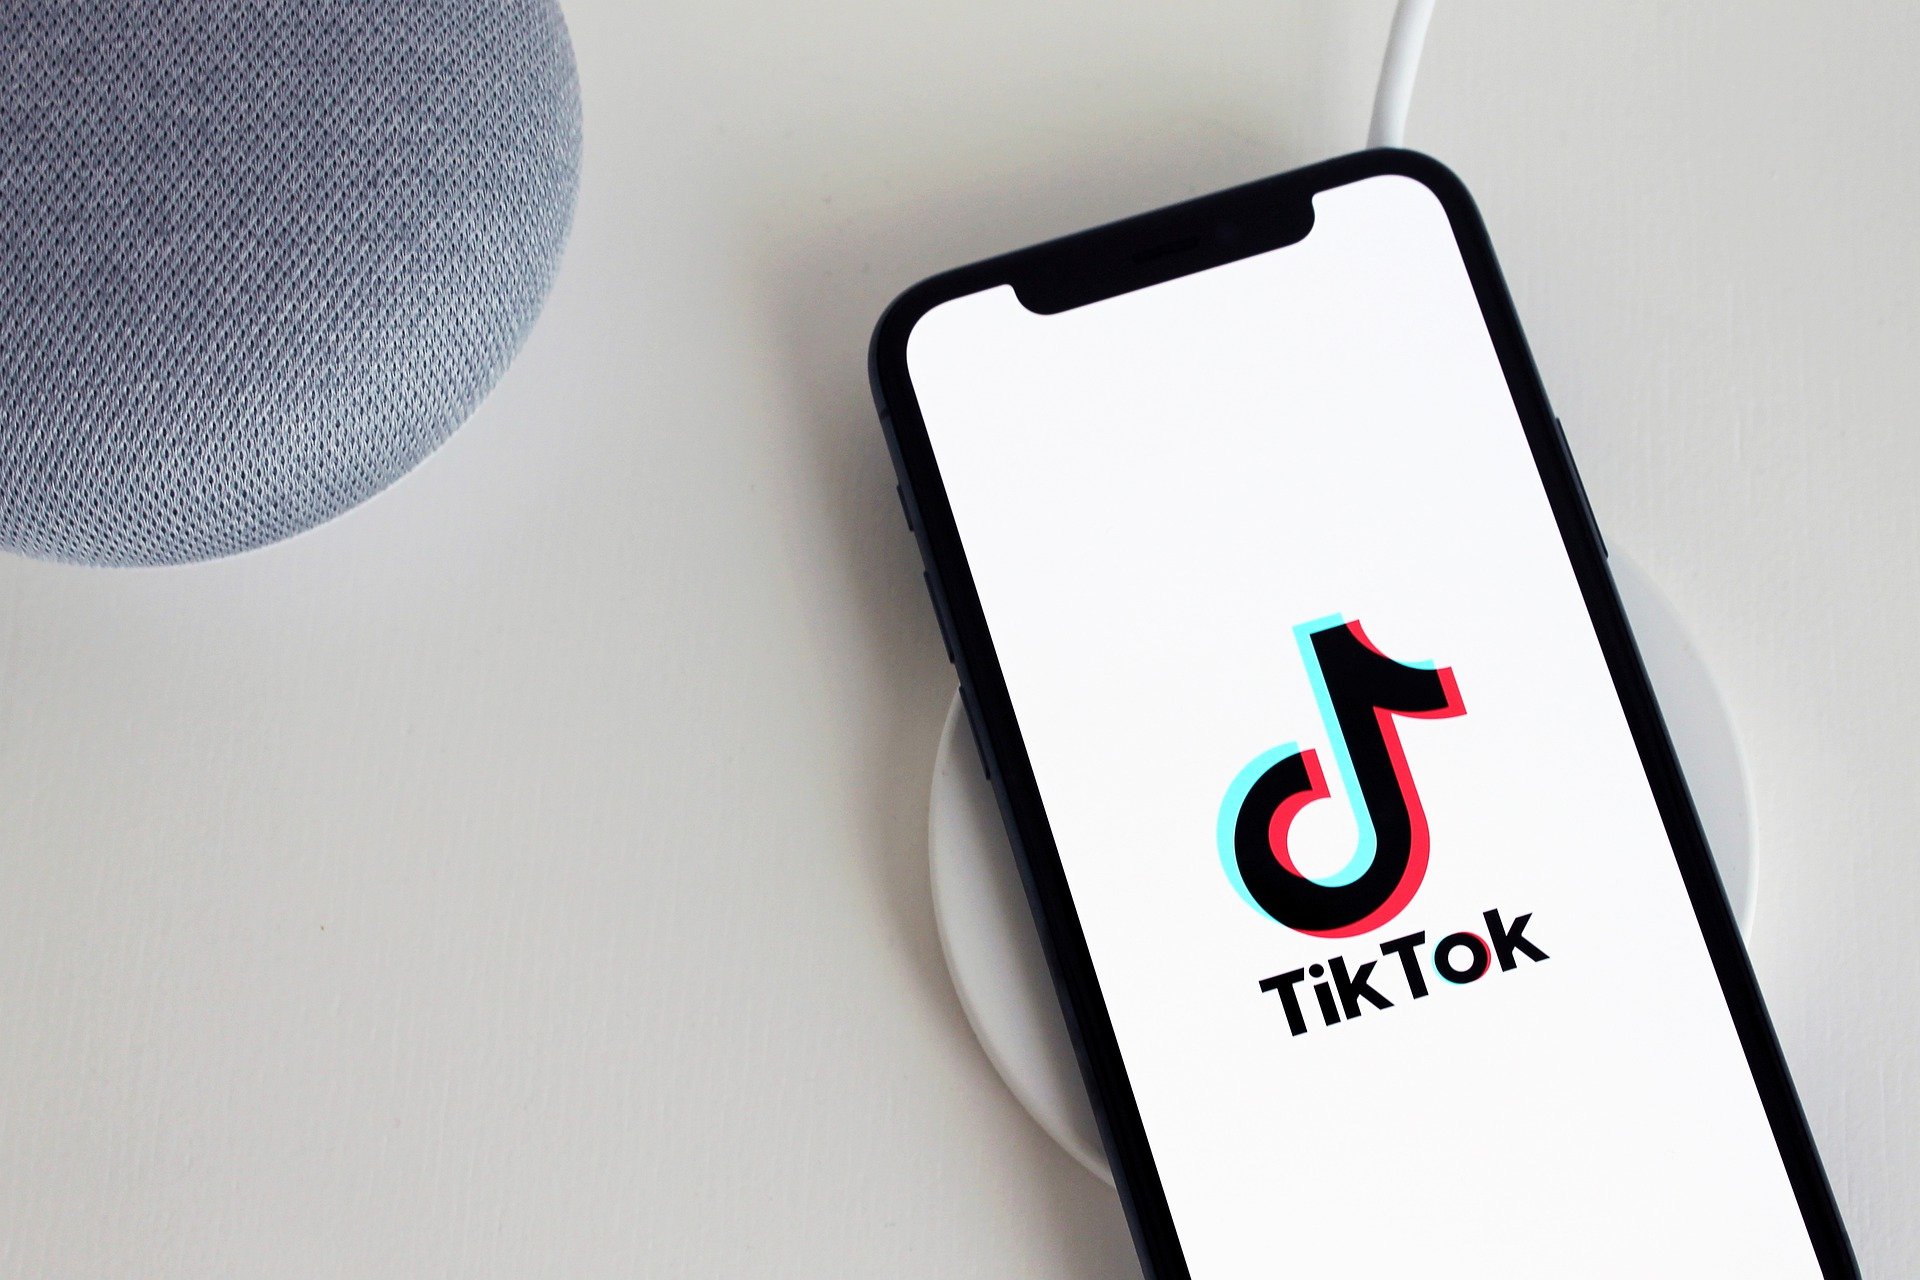 TikTok App on phone screen